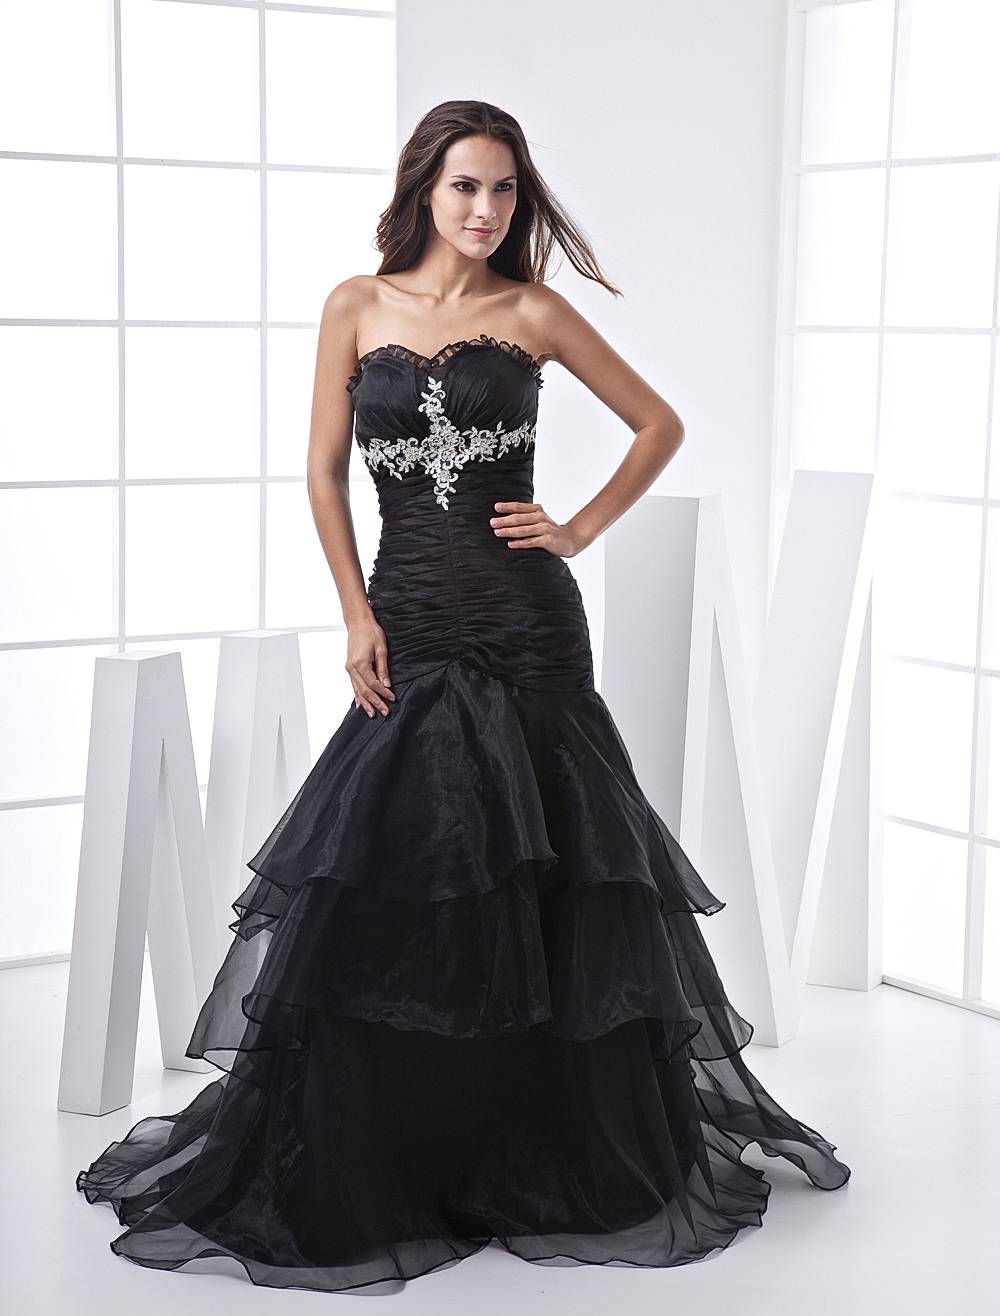 http://img.dressinwedding.com/upen/v/201211/20121104/Black-Satin-And-Organza-Mermaid-Prom-Dress-5617-2.jpg